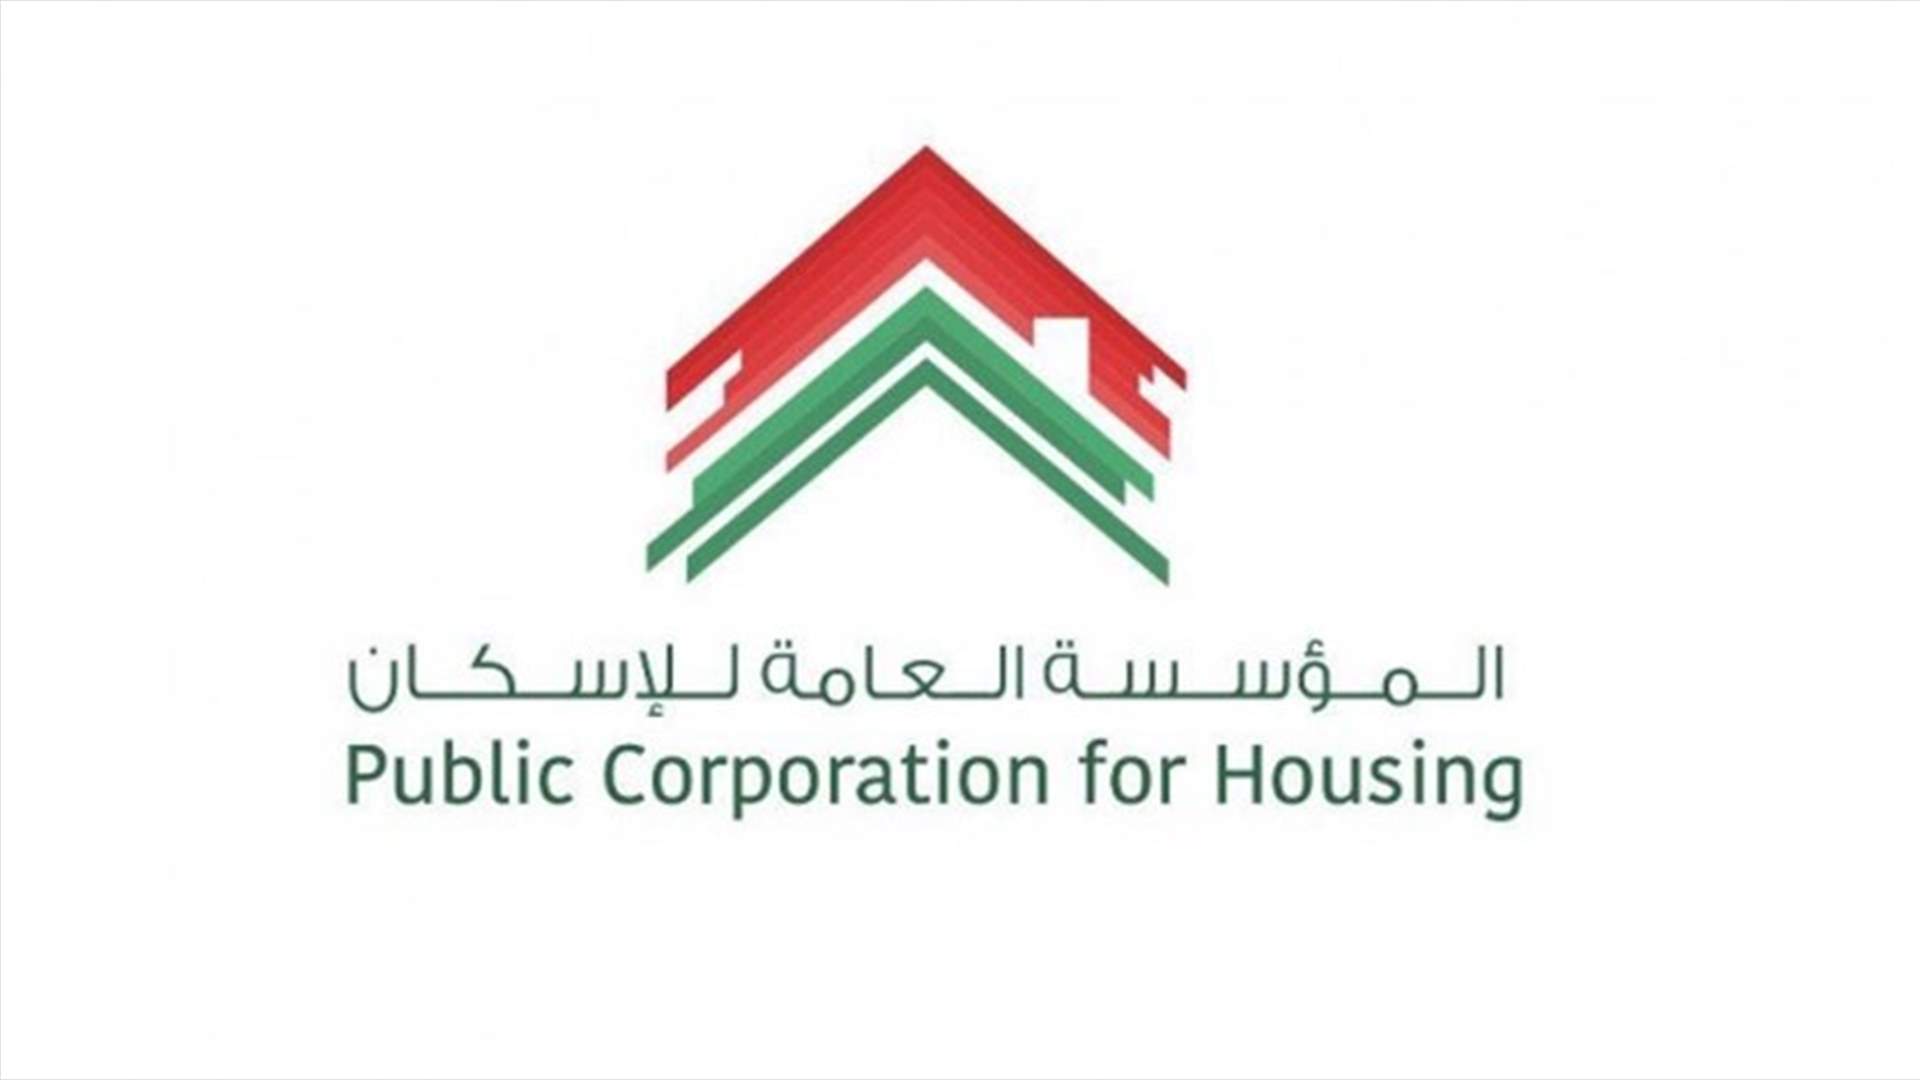 Public Corporation for Housing denies rumors